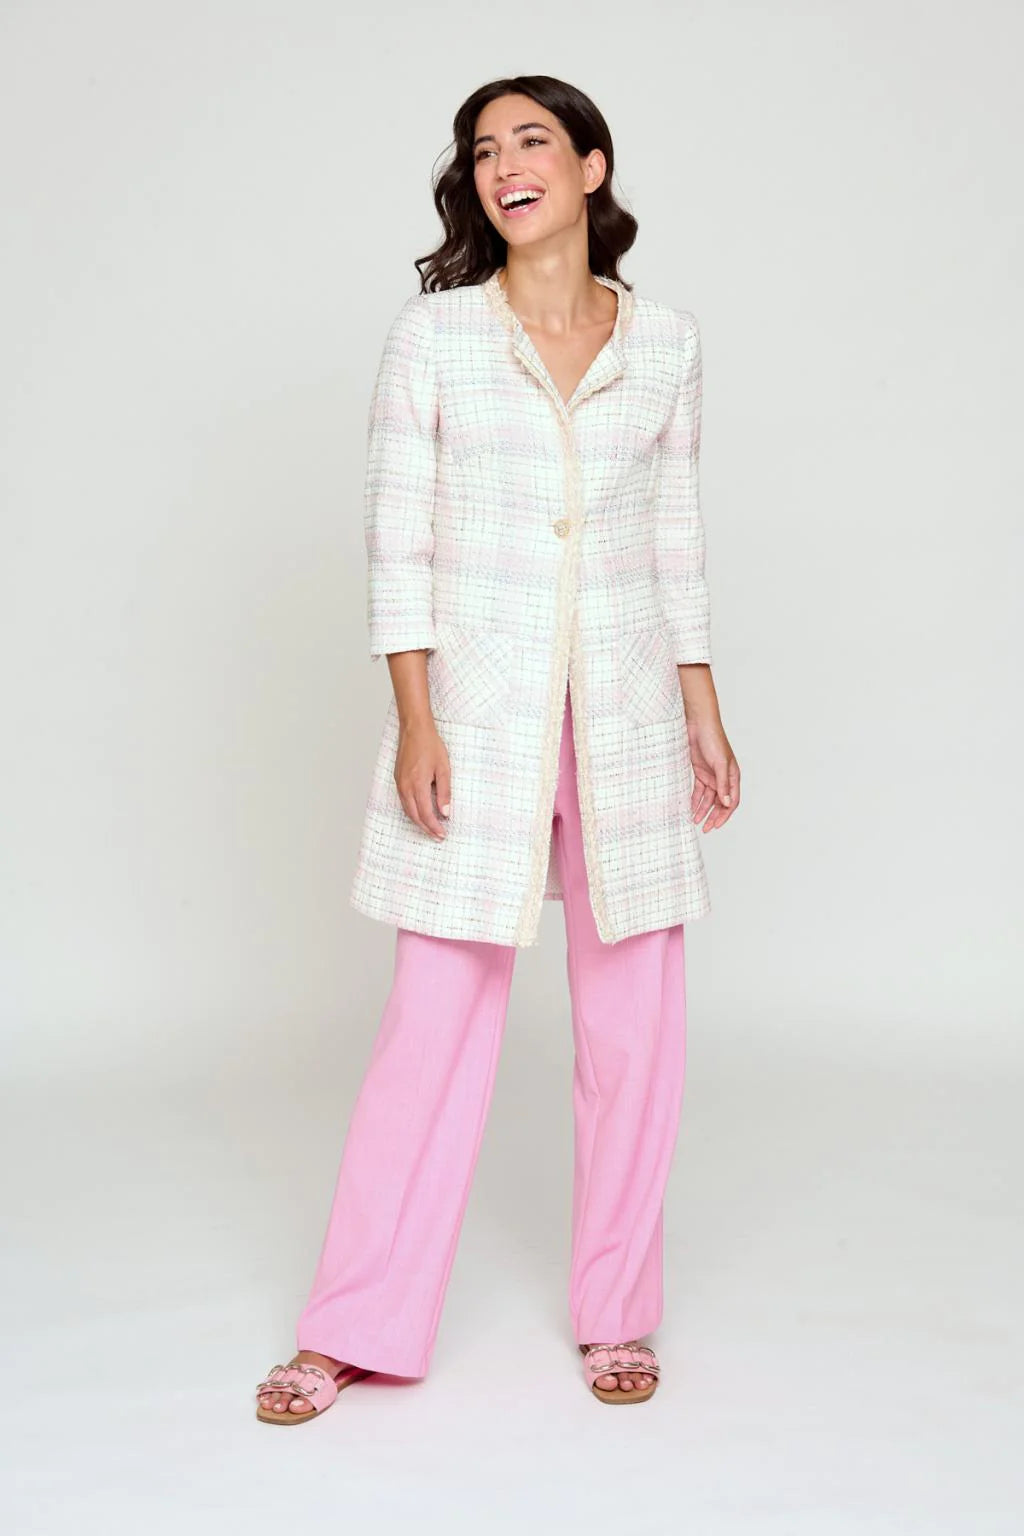 Bariloche Landas Long Pink Tweed Style Blazer Jacket 